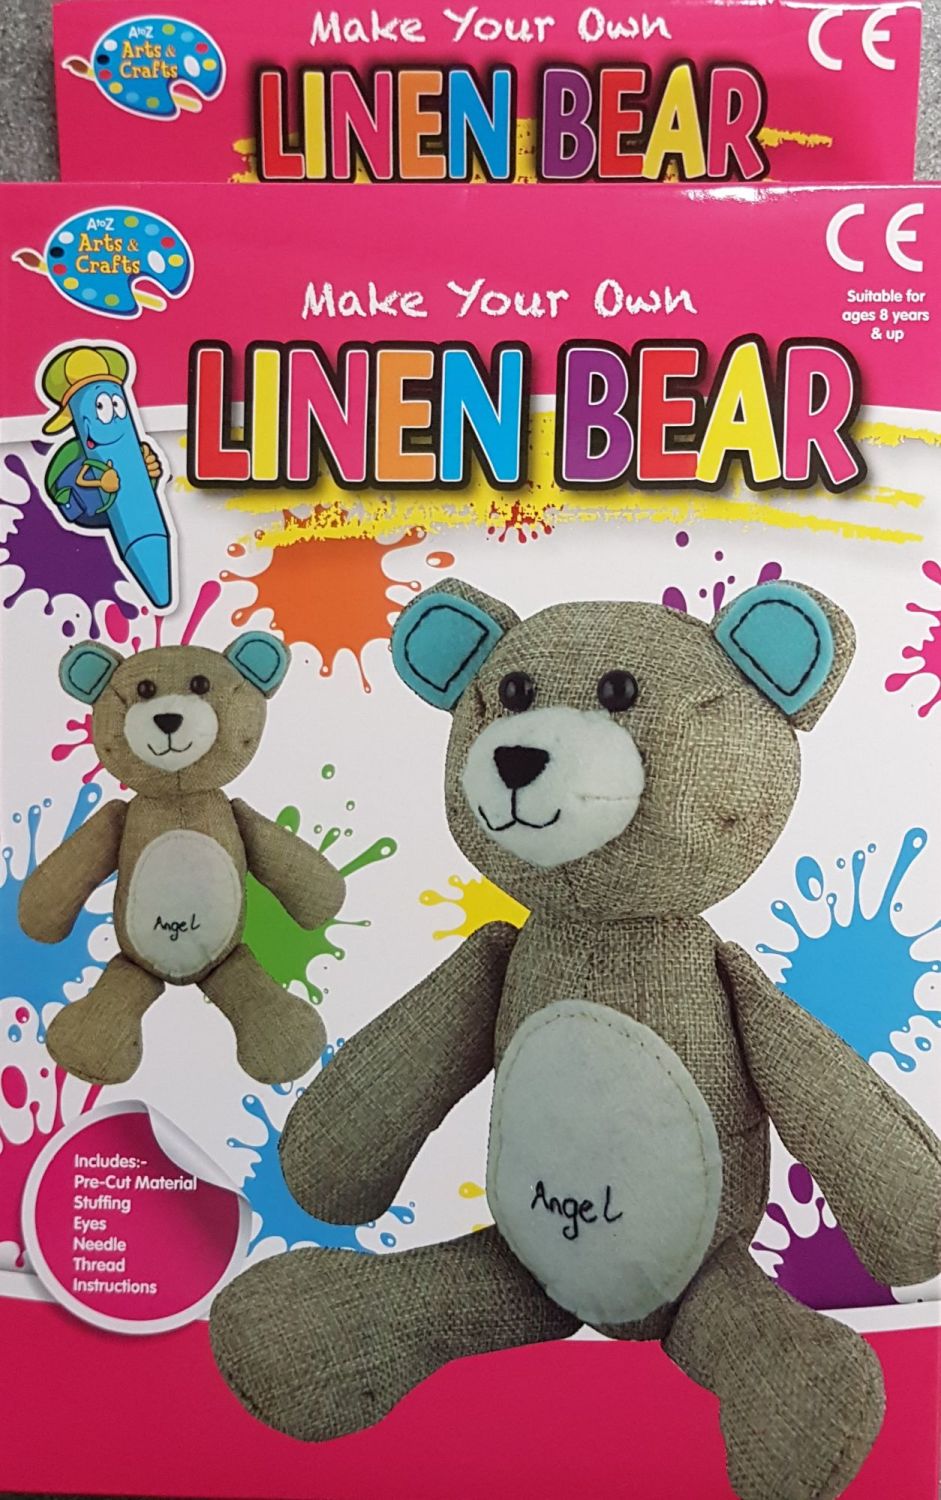 Make your own linen bear